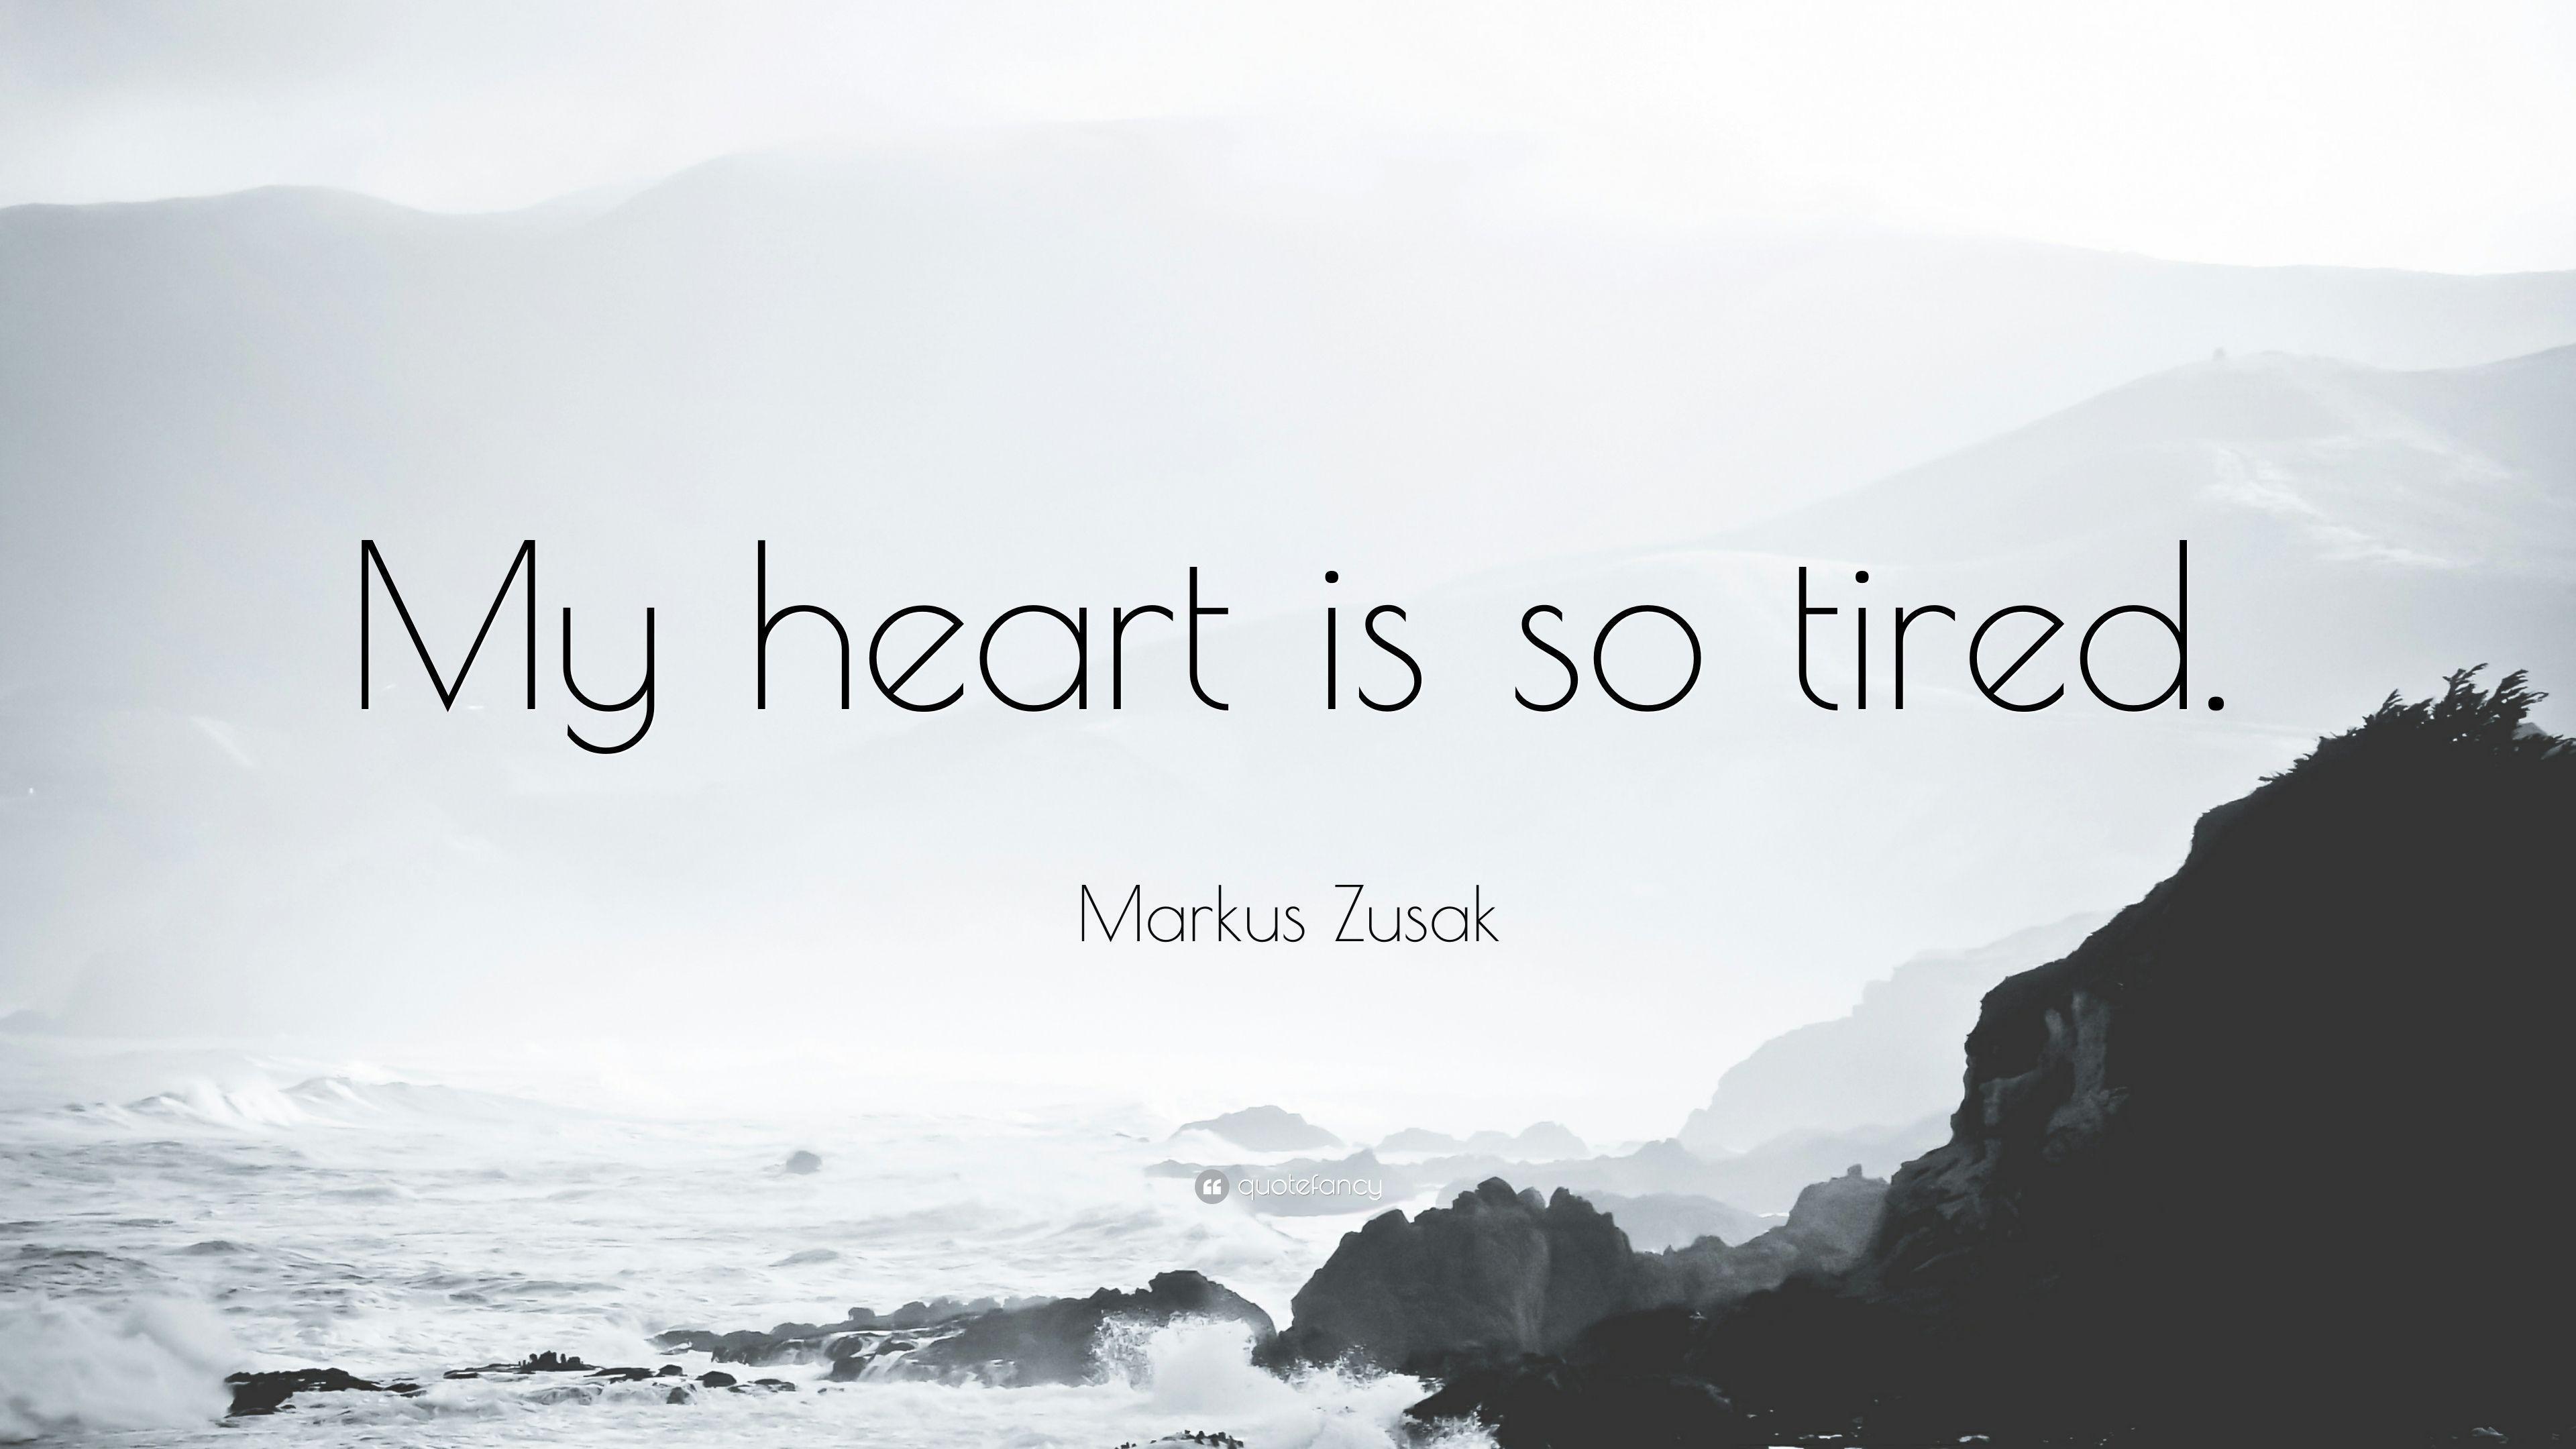 Markus Zusak Quote: “My heart is so tired.” 10 wallpaper